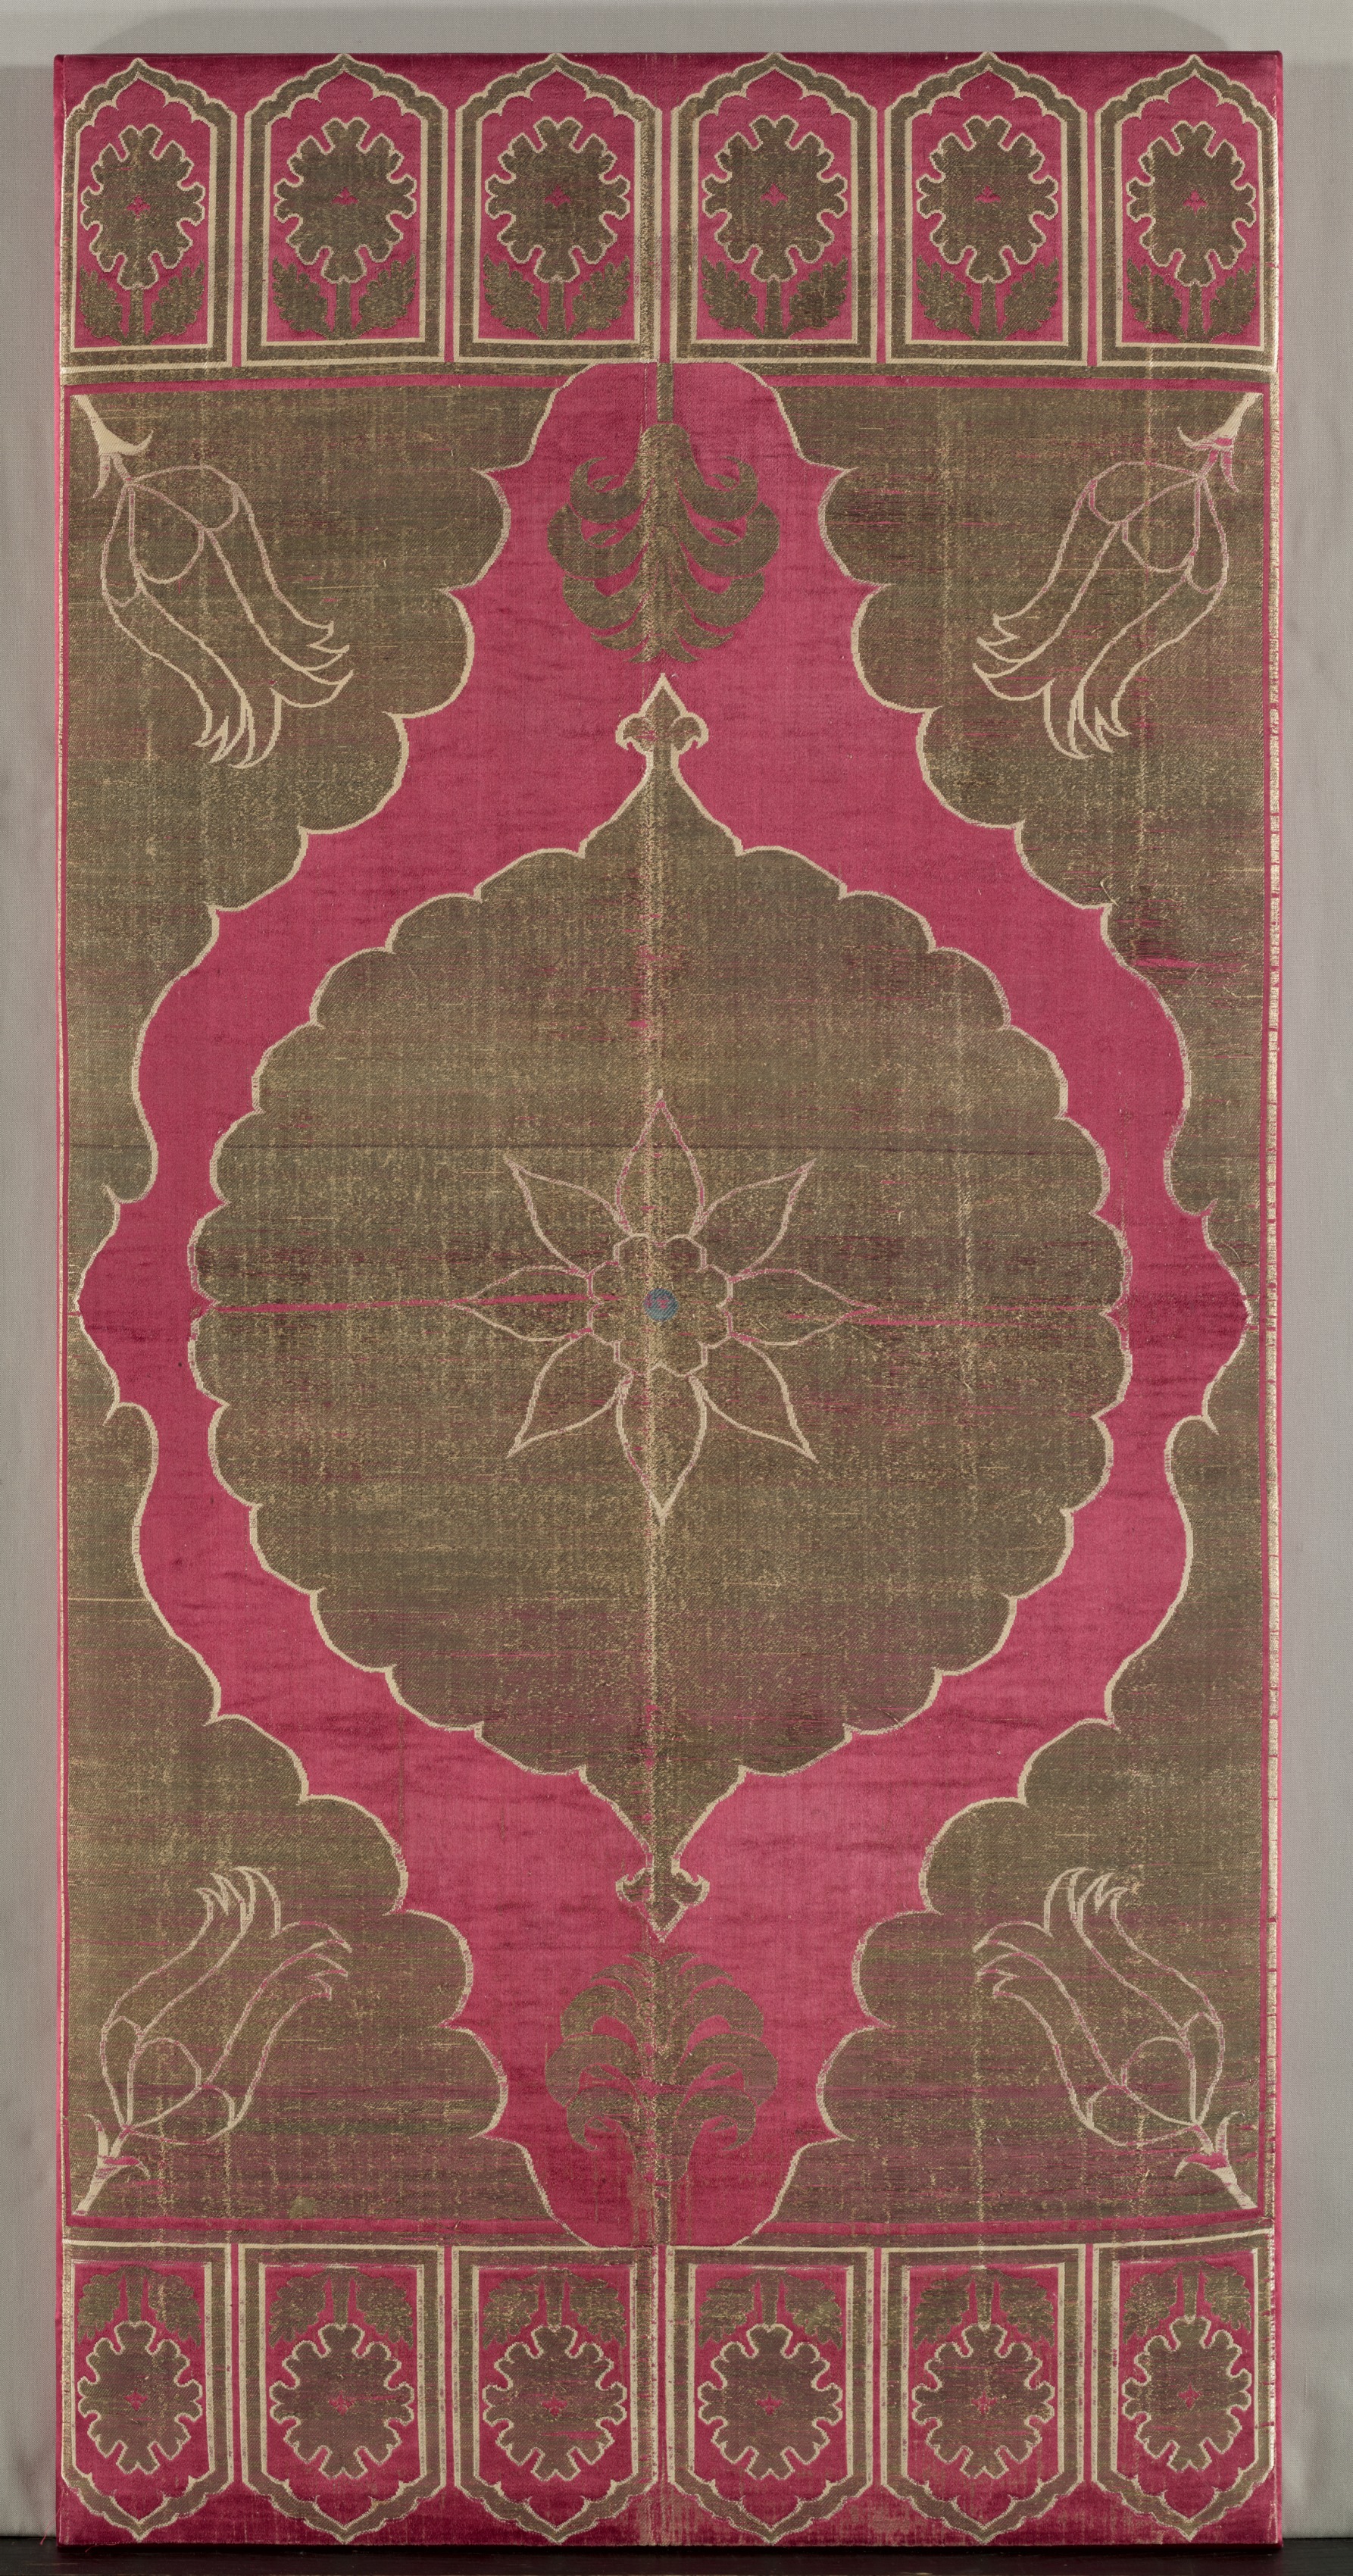 Brocaded Silk Cushion Cover & Iranian Striped Silk Surround